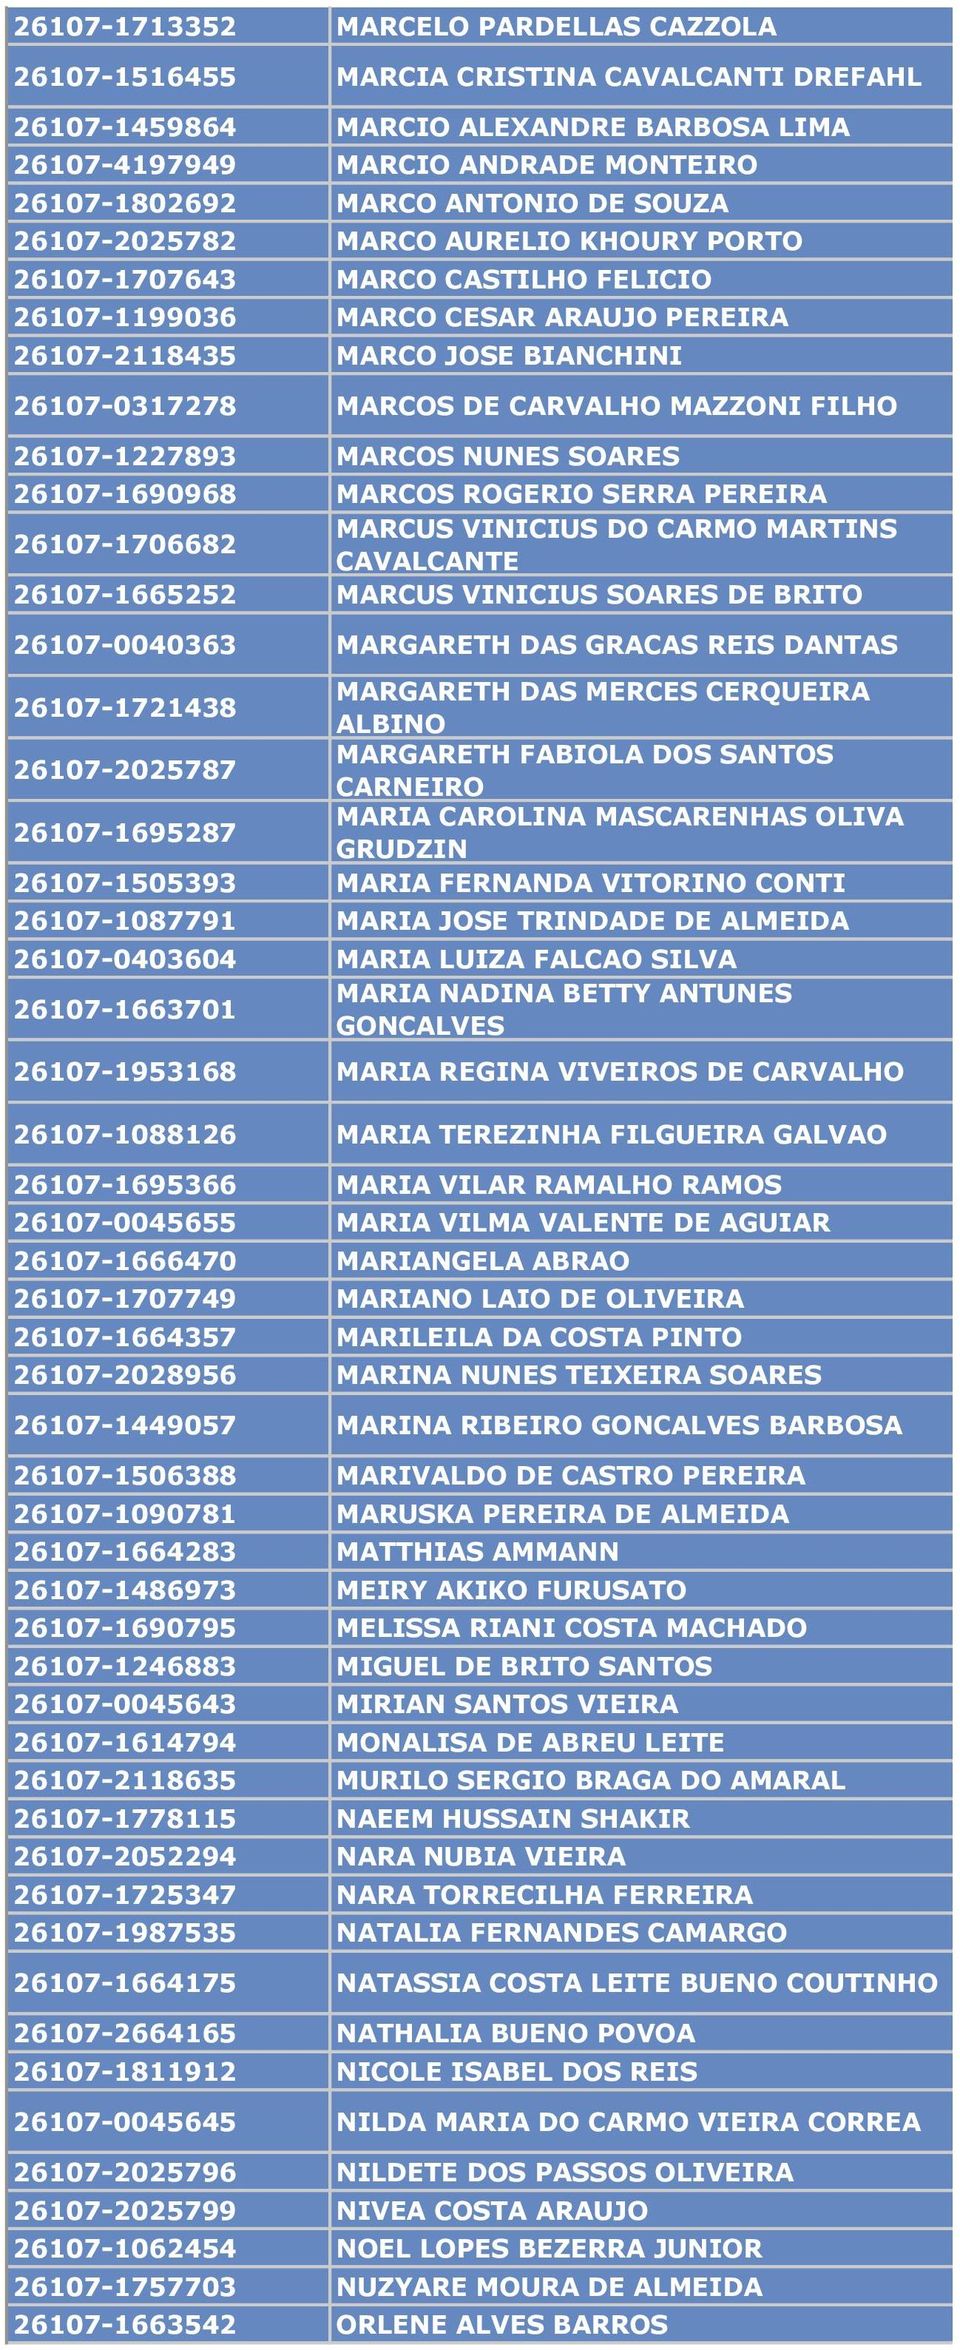 MAZZONI FILHO 26107-1227893 MARCOS NUNES SOARES 26107-1690968 MARCOS ROGERIO SERRA PEREIRA 26107-1706682 MARCUS VINICIUS DO CARMO MARTINS CAVALCANTE 26107-1665252 MARCUS VINICIUS SOARES DE BRITO